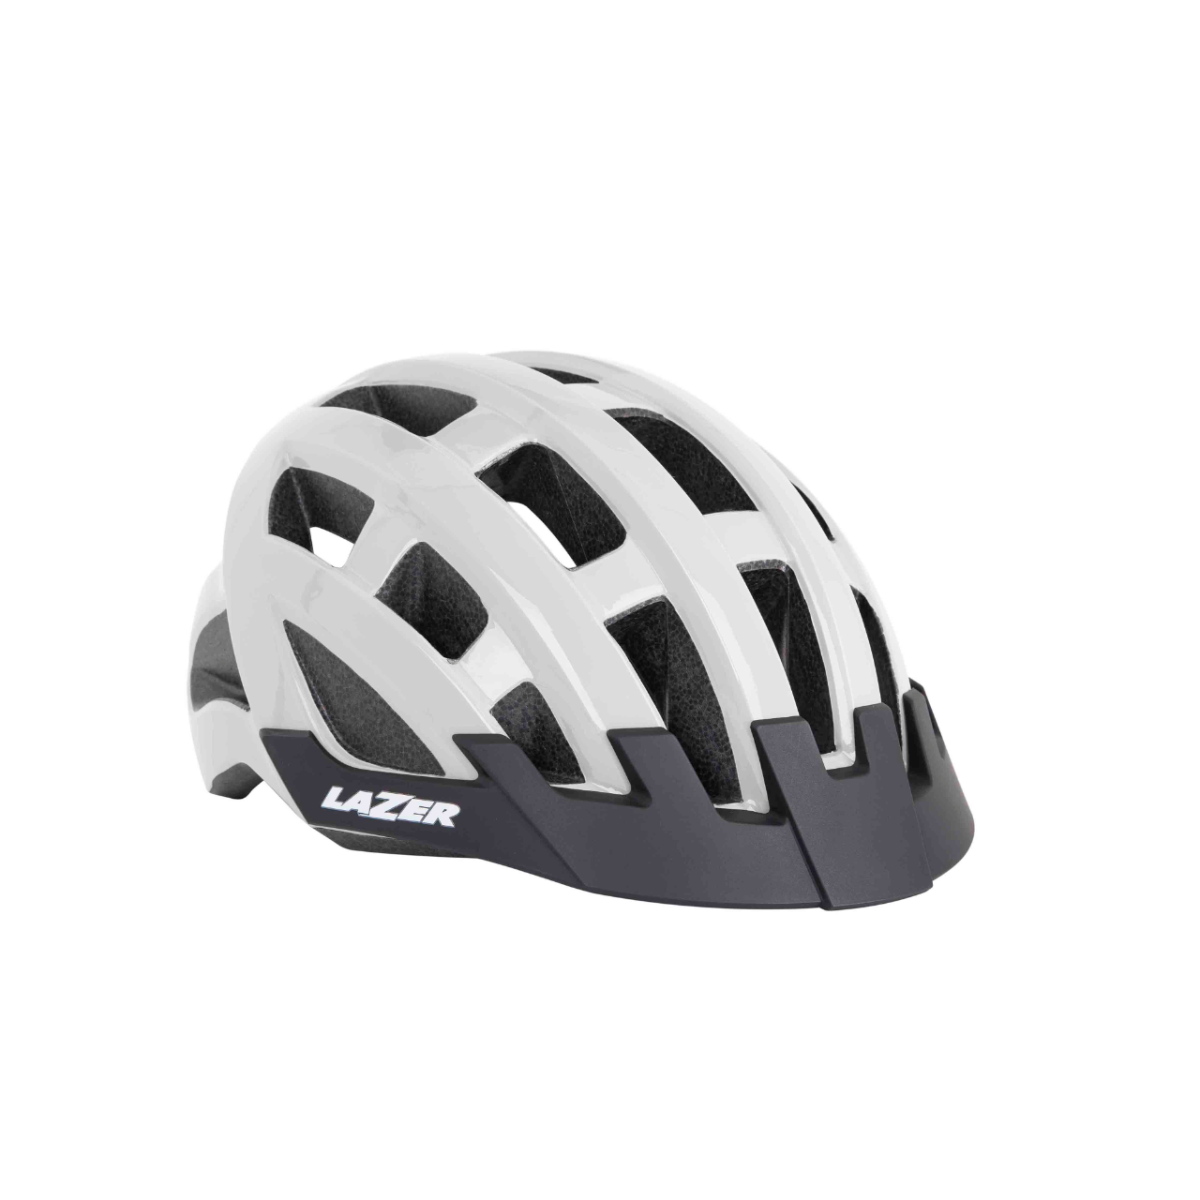 Helmet Lazer Compact White Uni